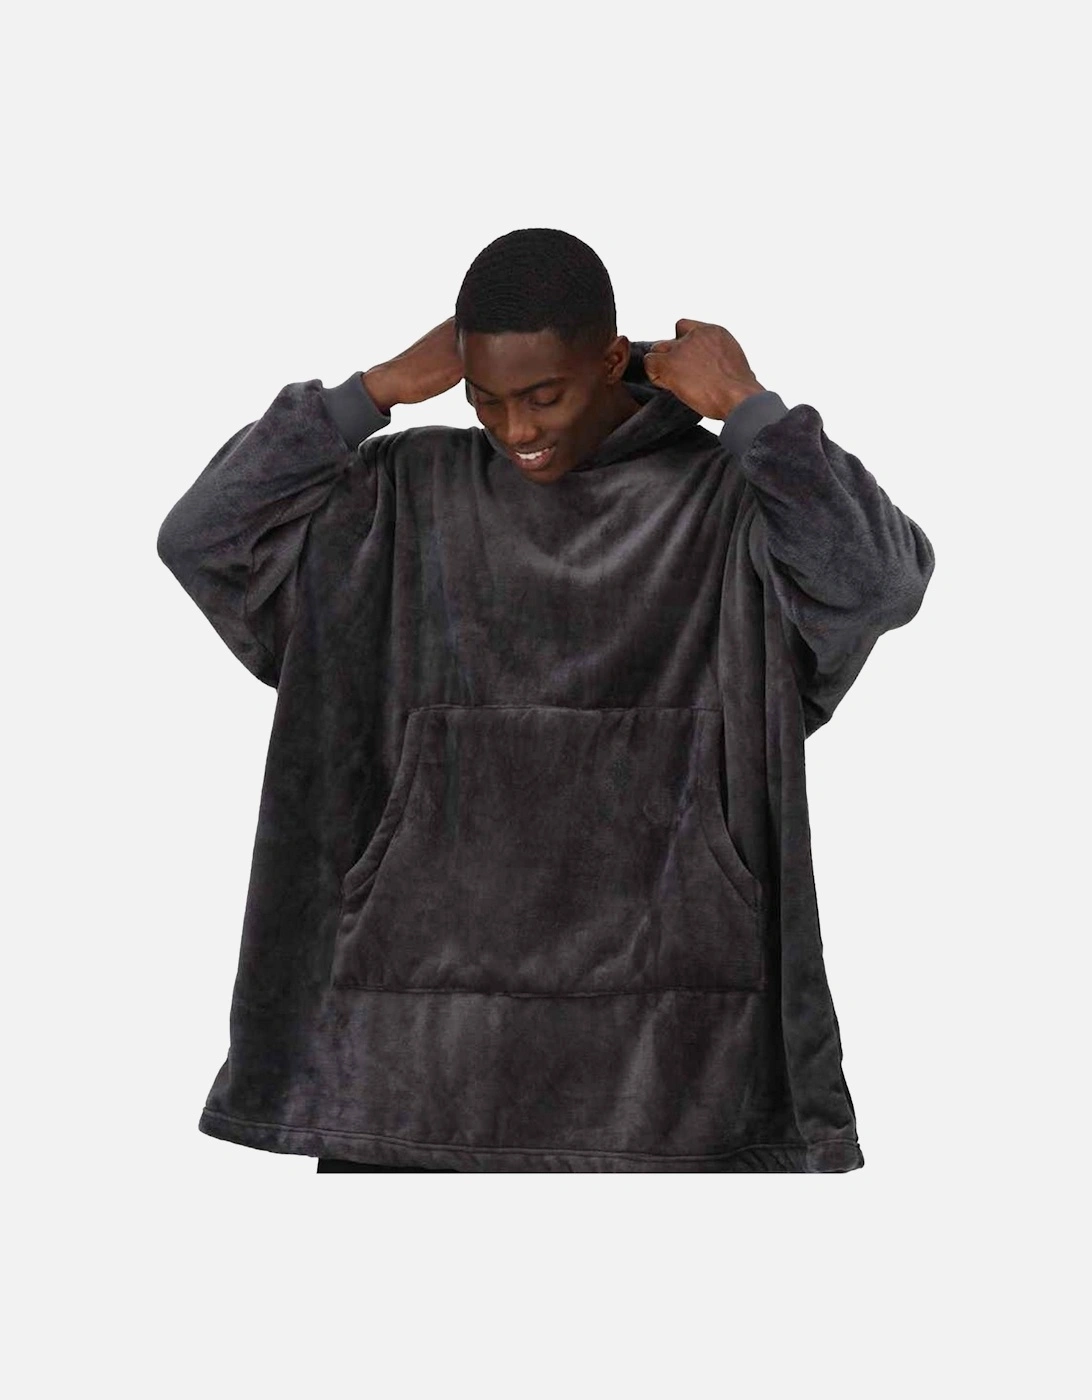 Unisex Adult Snuggler Fleece Oversized Hoodie